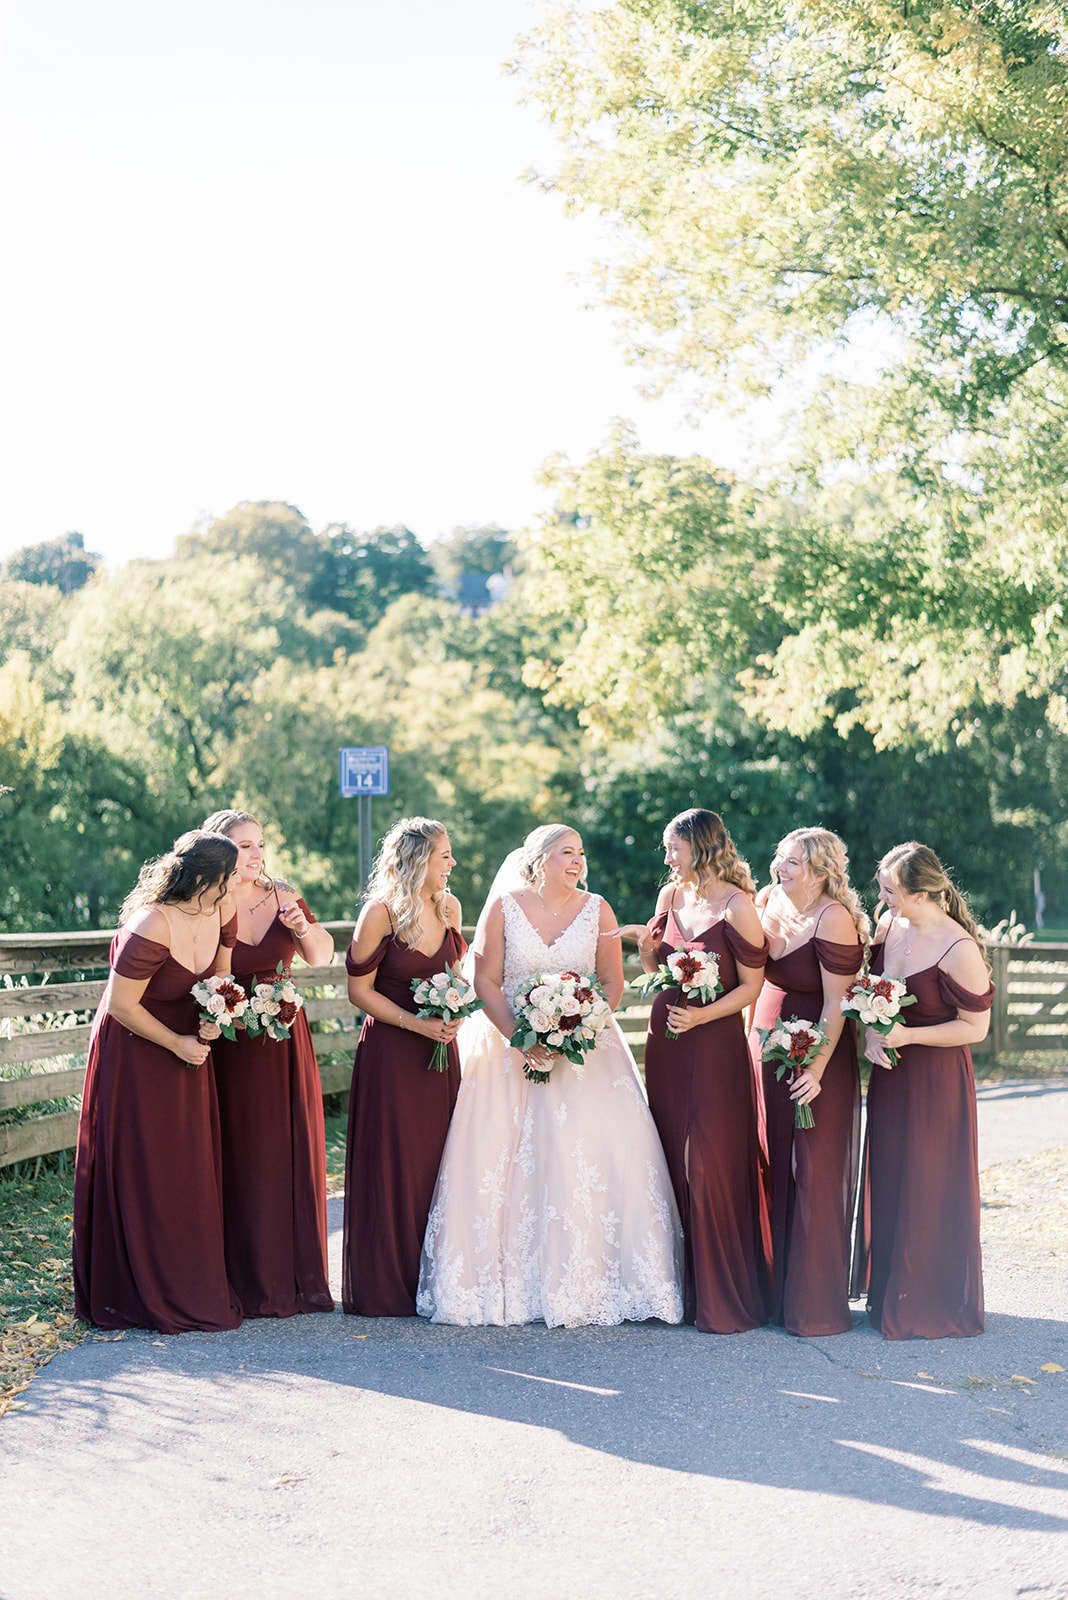 Pennsylvania wedding photographer captures bride laughing with bridesmaids wearing burgundy dresses